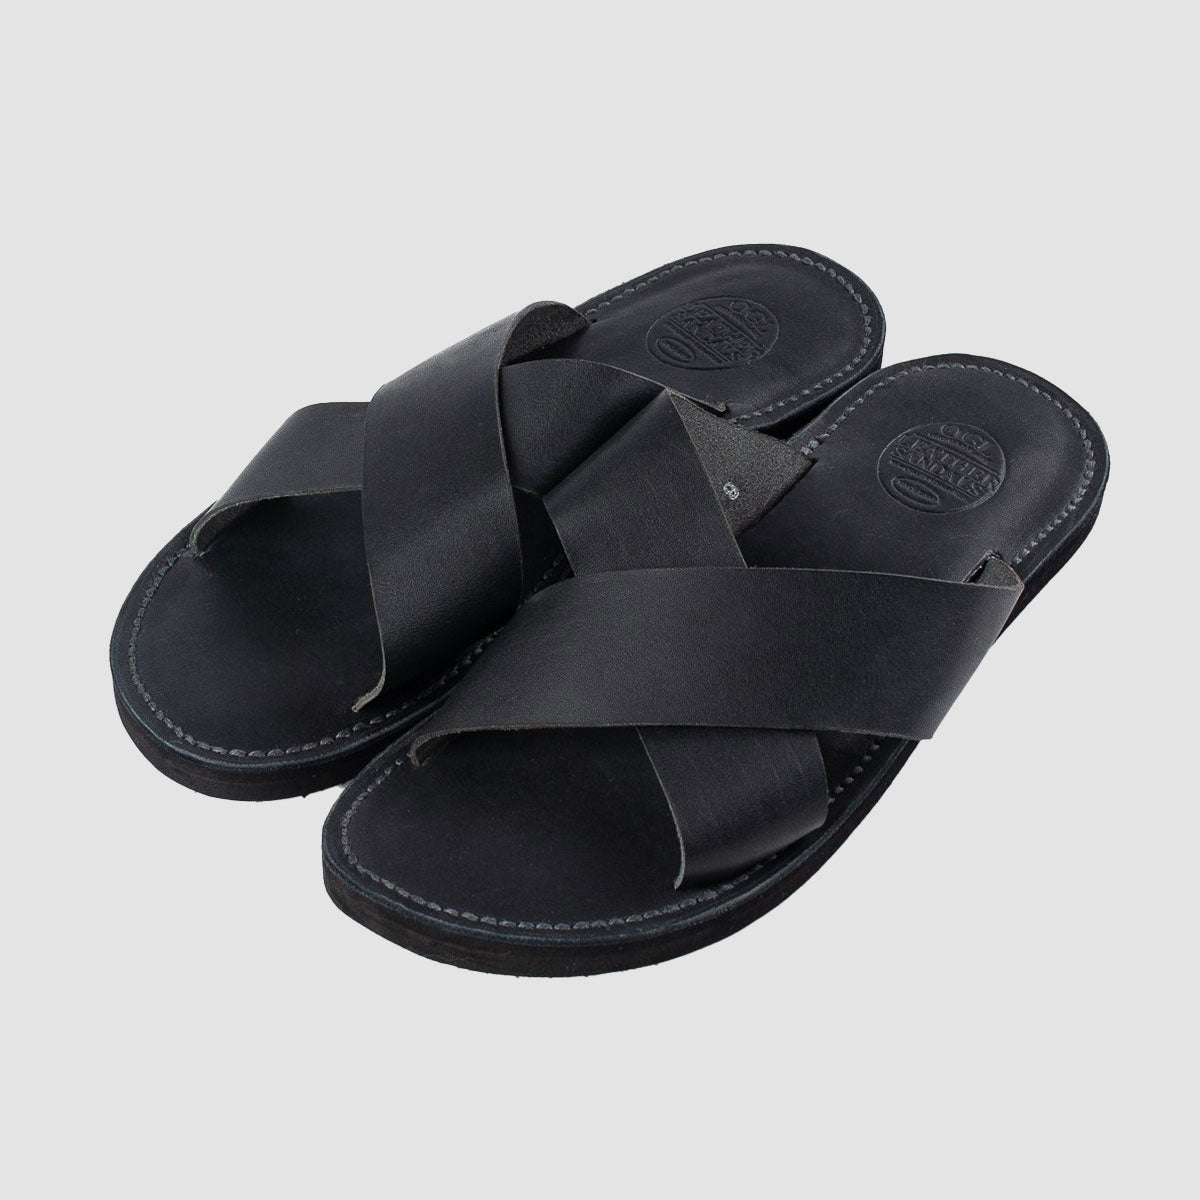 OGL X Dr. Sole Leather Cross Sandals - Black